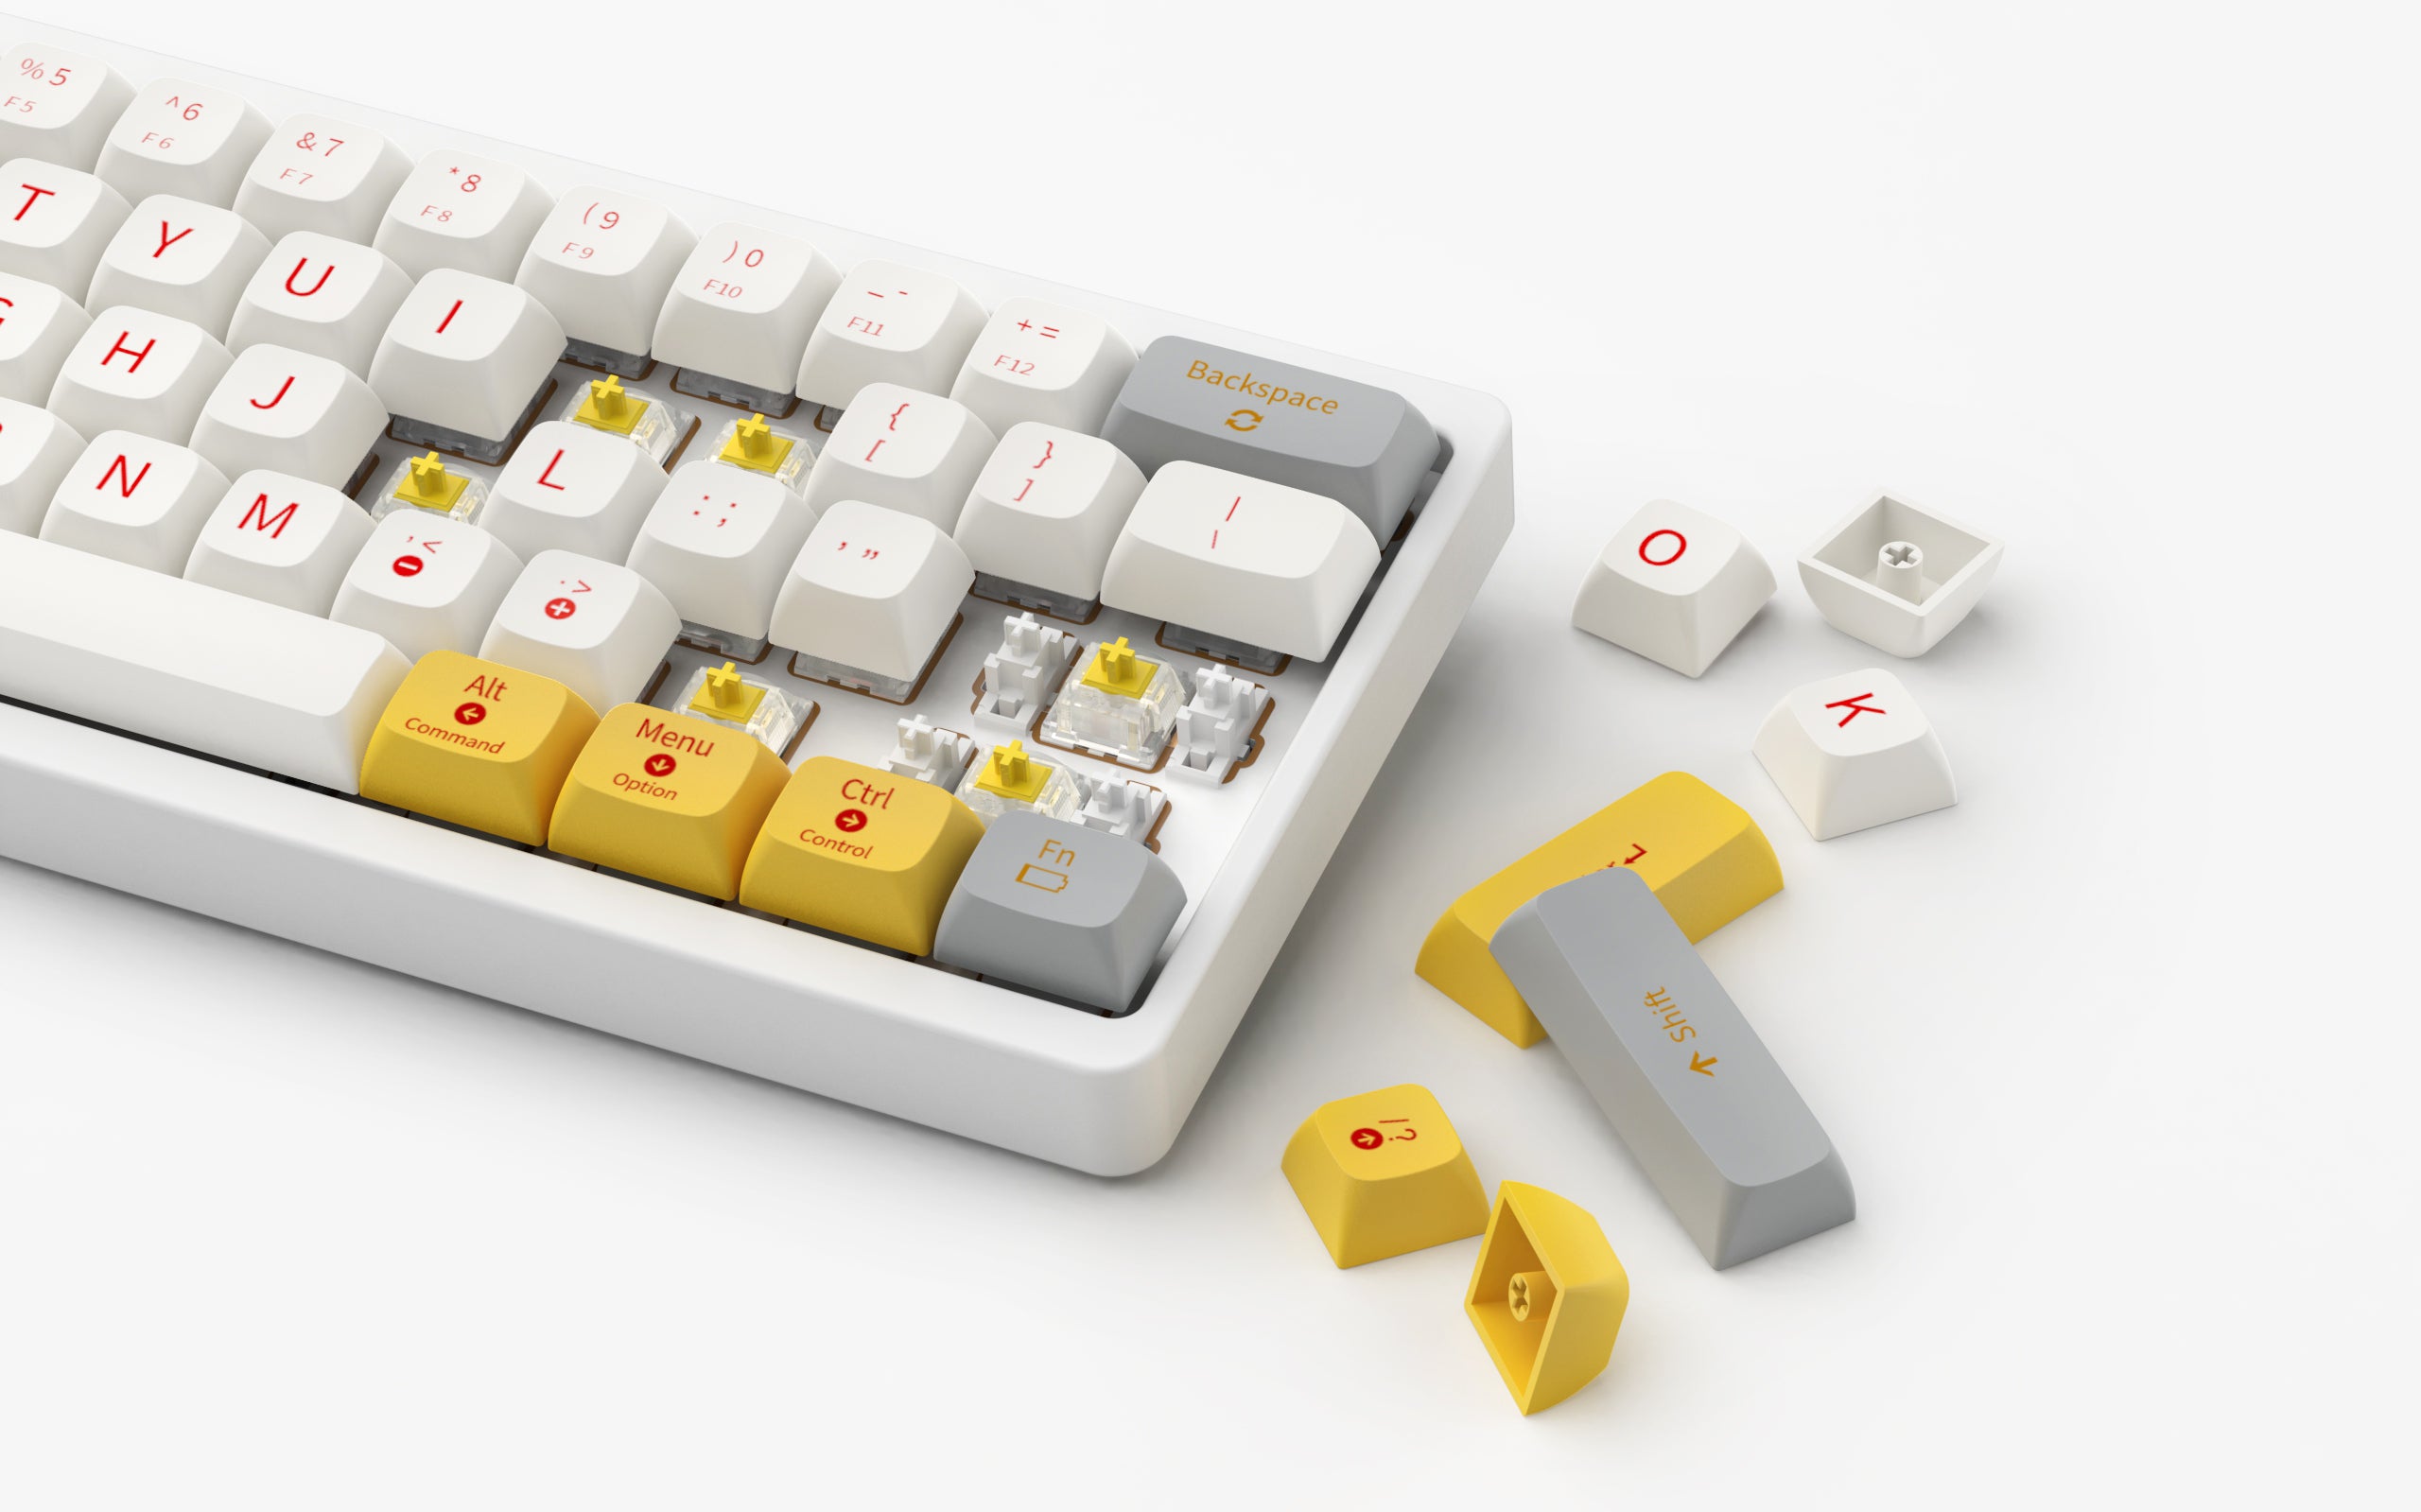 C641 mechanical keyboard - keycaps